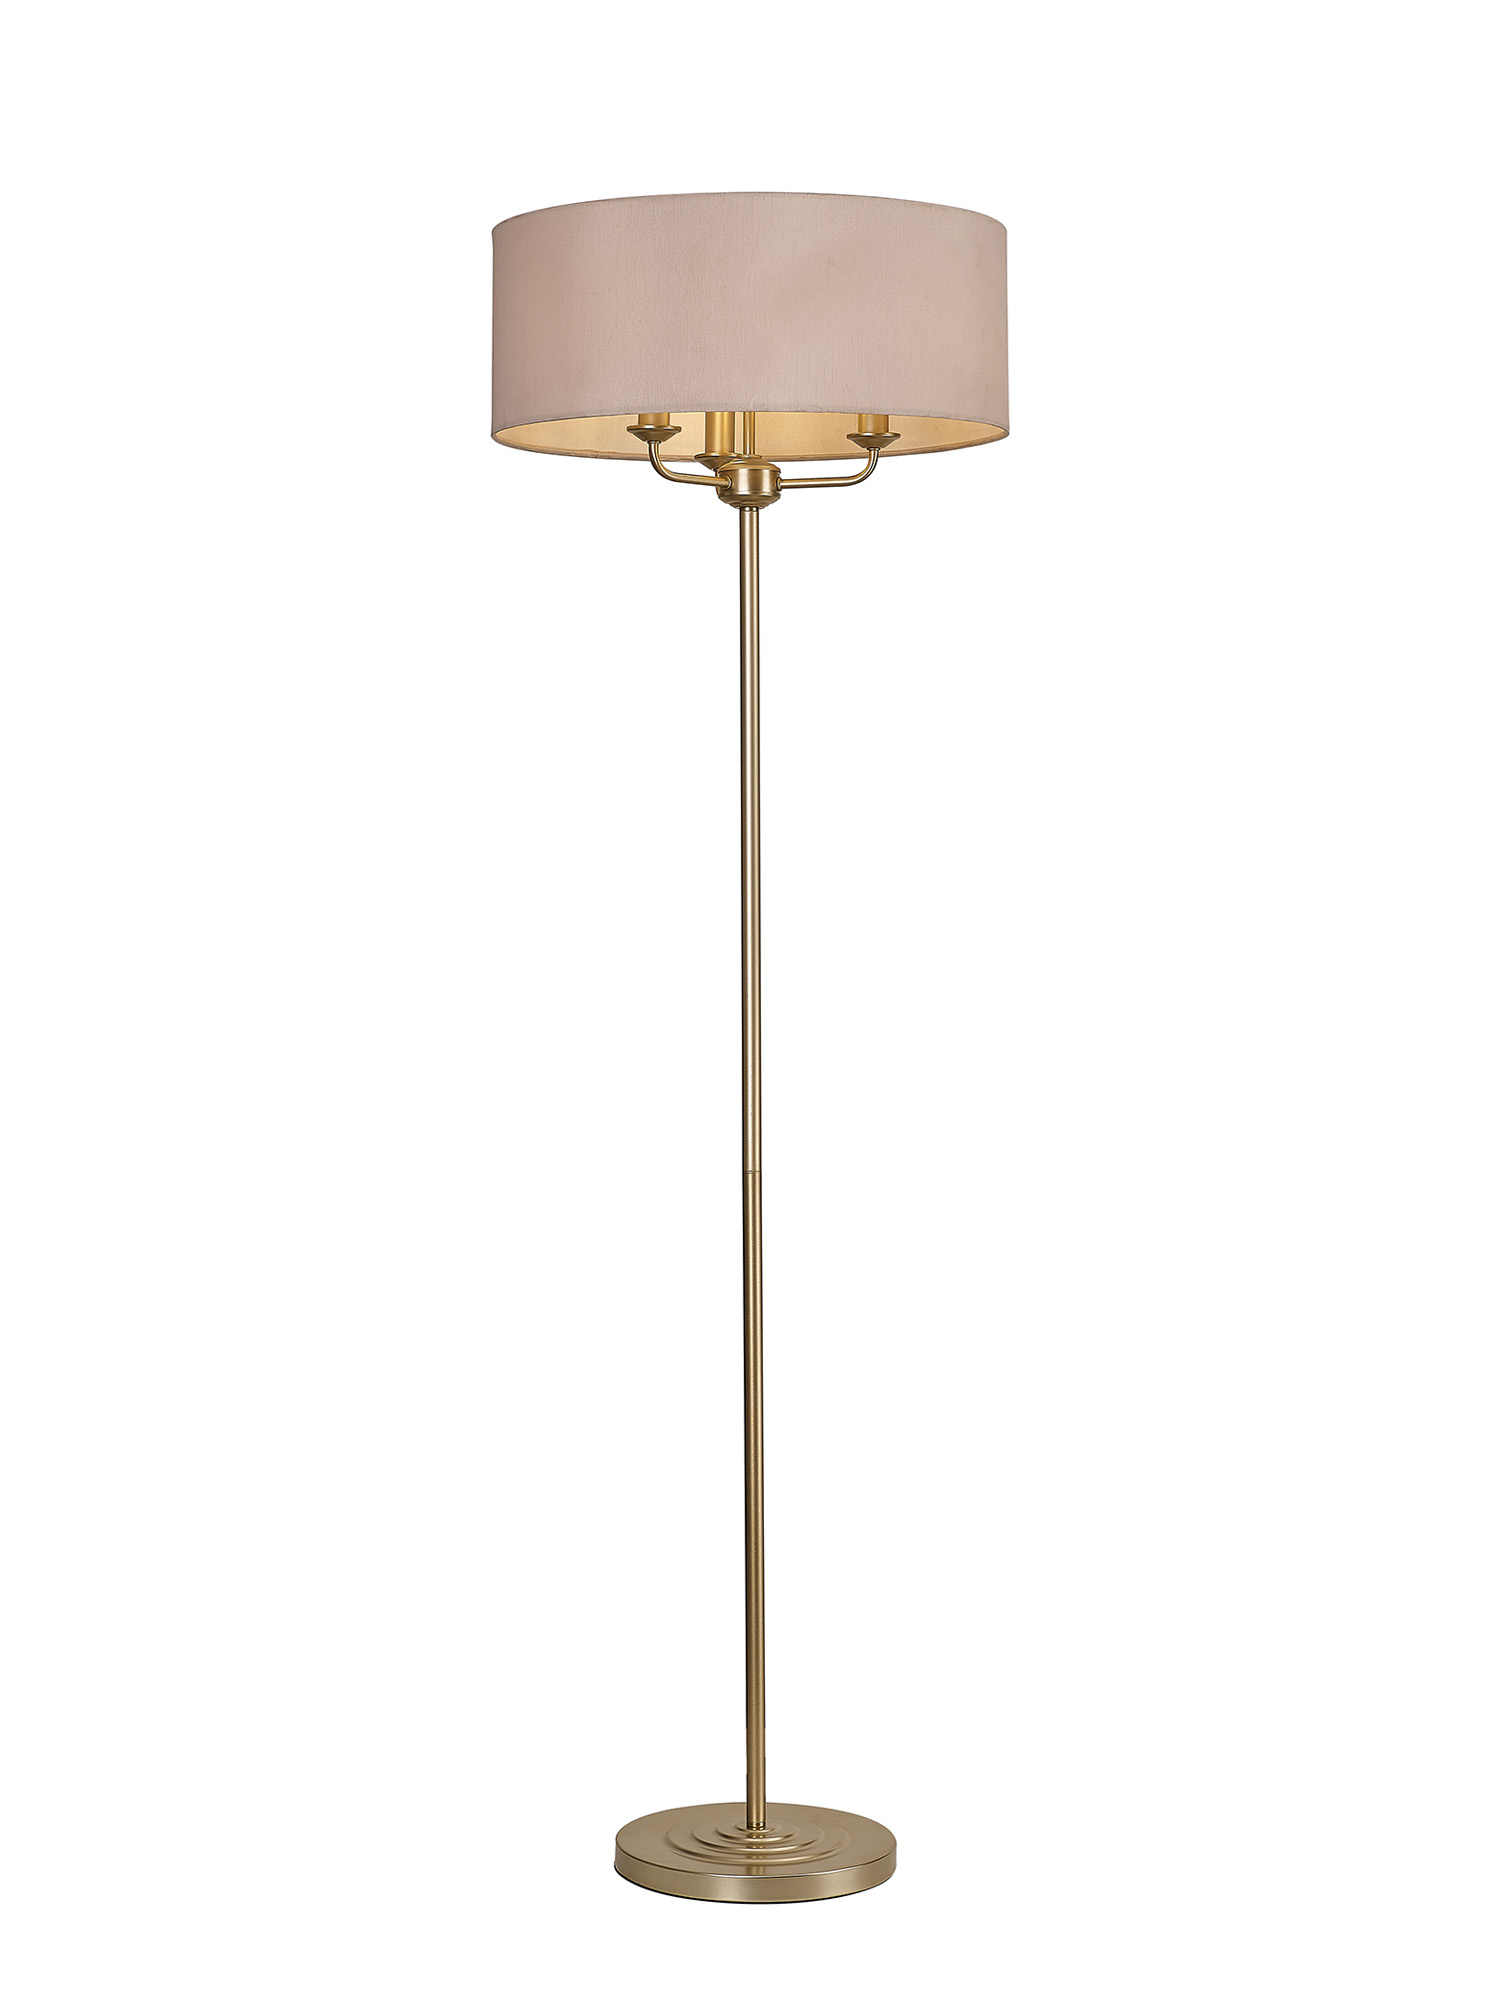 DK1002  Banyan 45cm 3 Light Floor Lamp Champagne Gold; Nude Beige